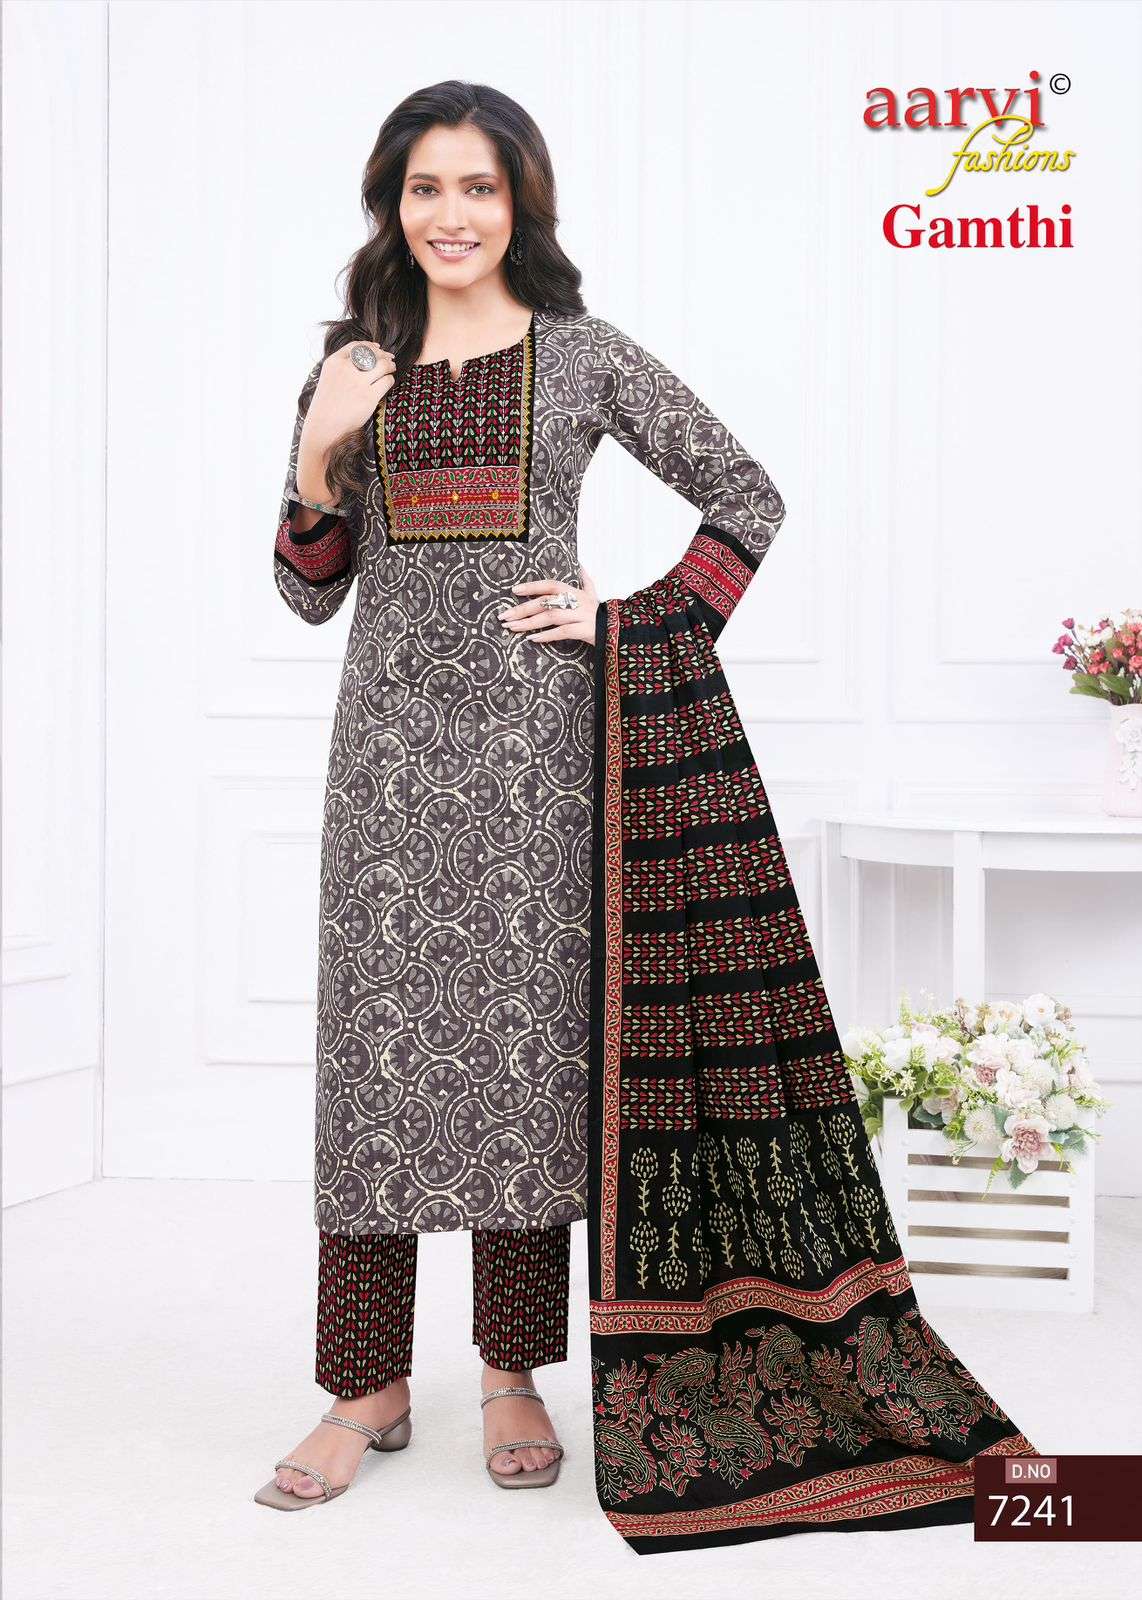 Gamthi Vol 3 Buy Aarvi Fashion Wholesale Online Lowest Price Cheapest Cotton Kurta Suit Sets